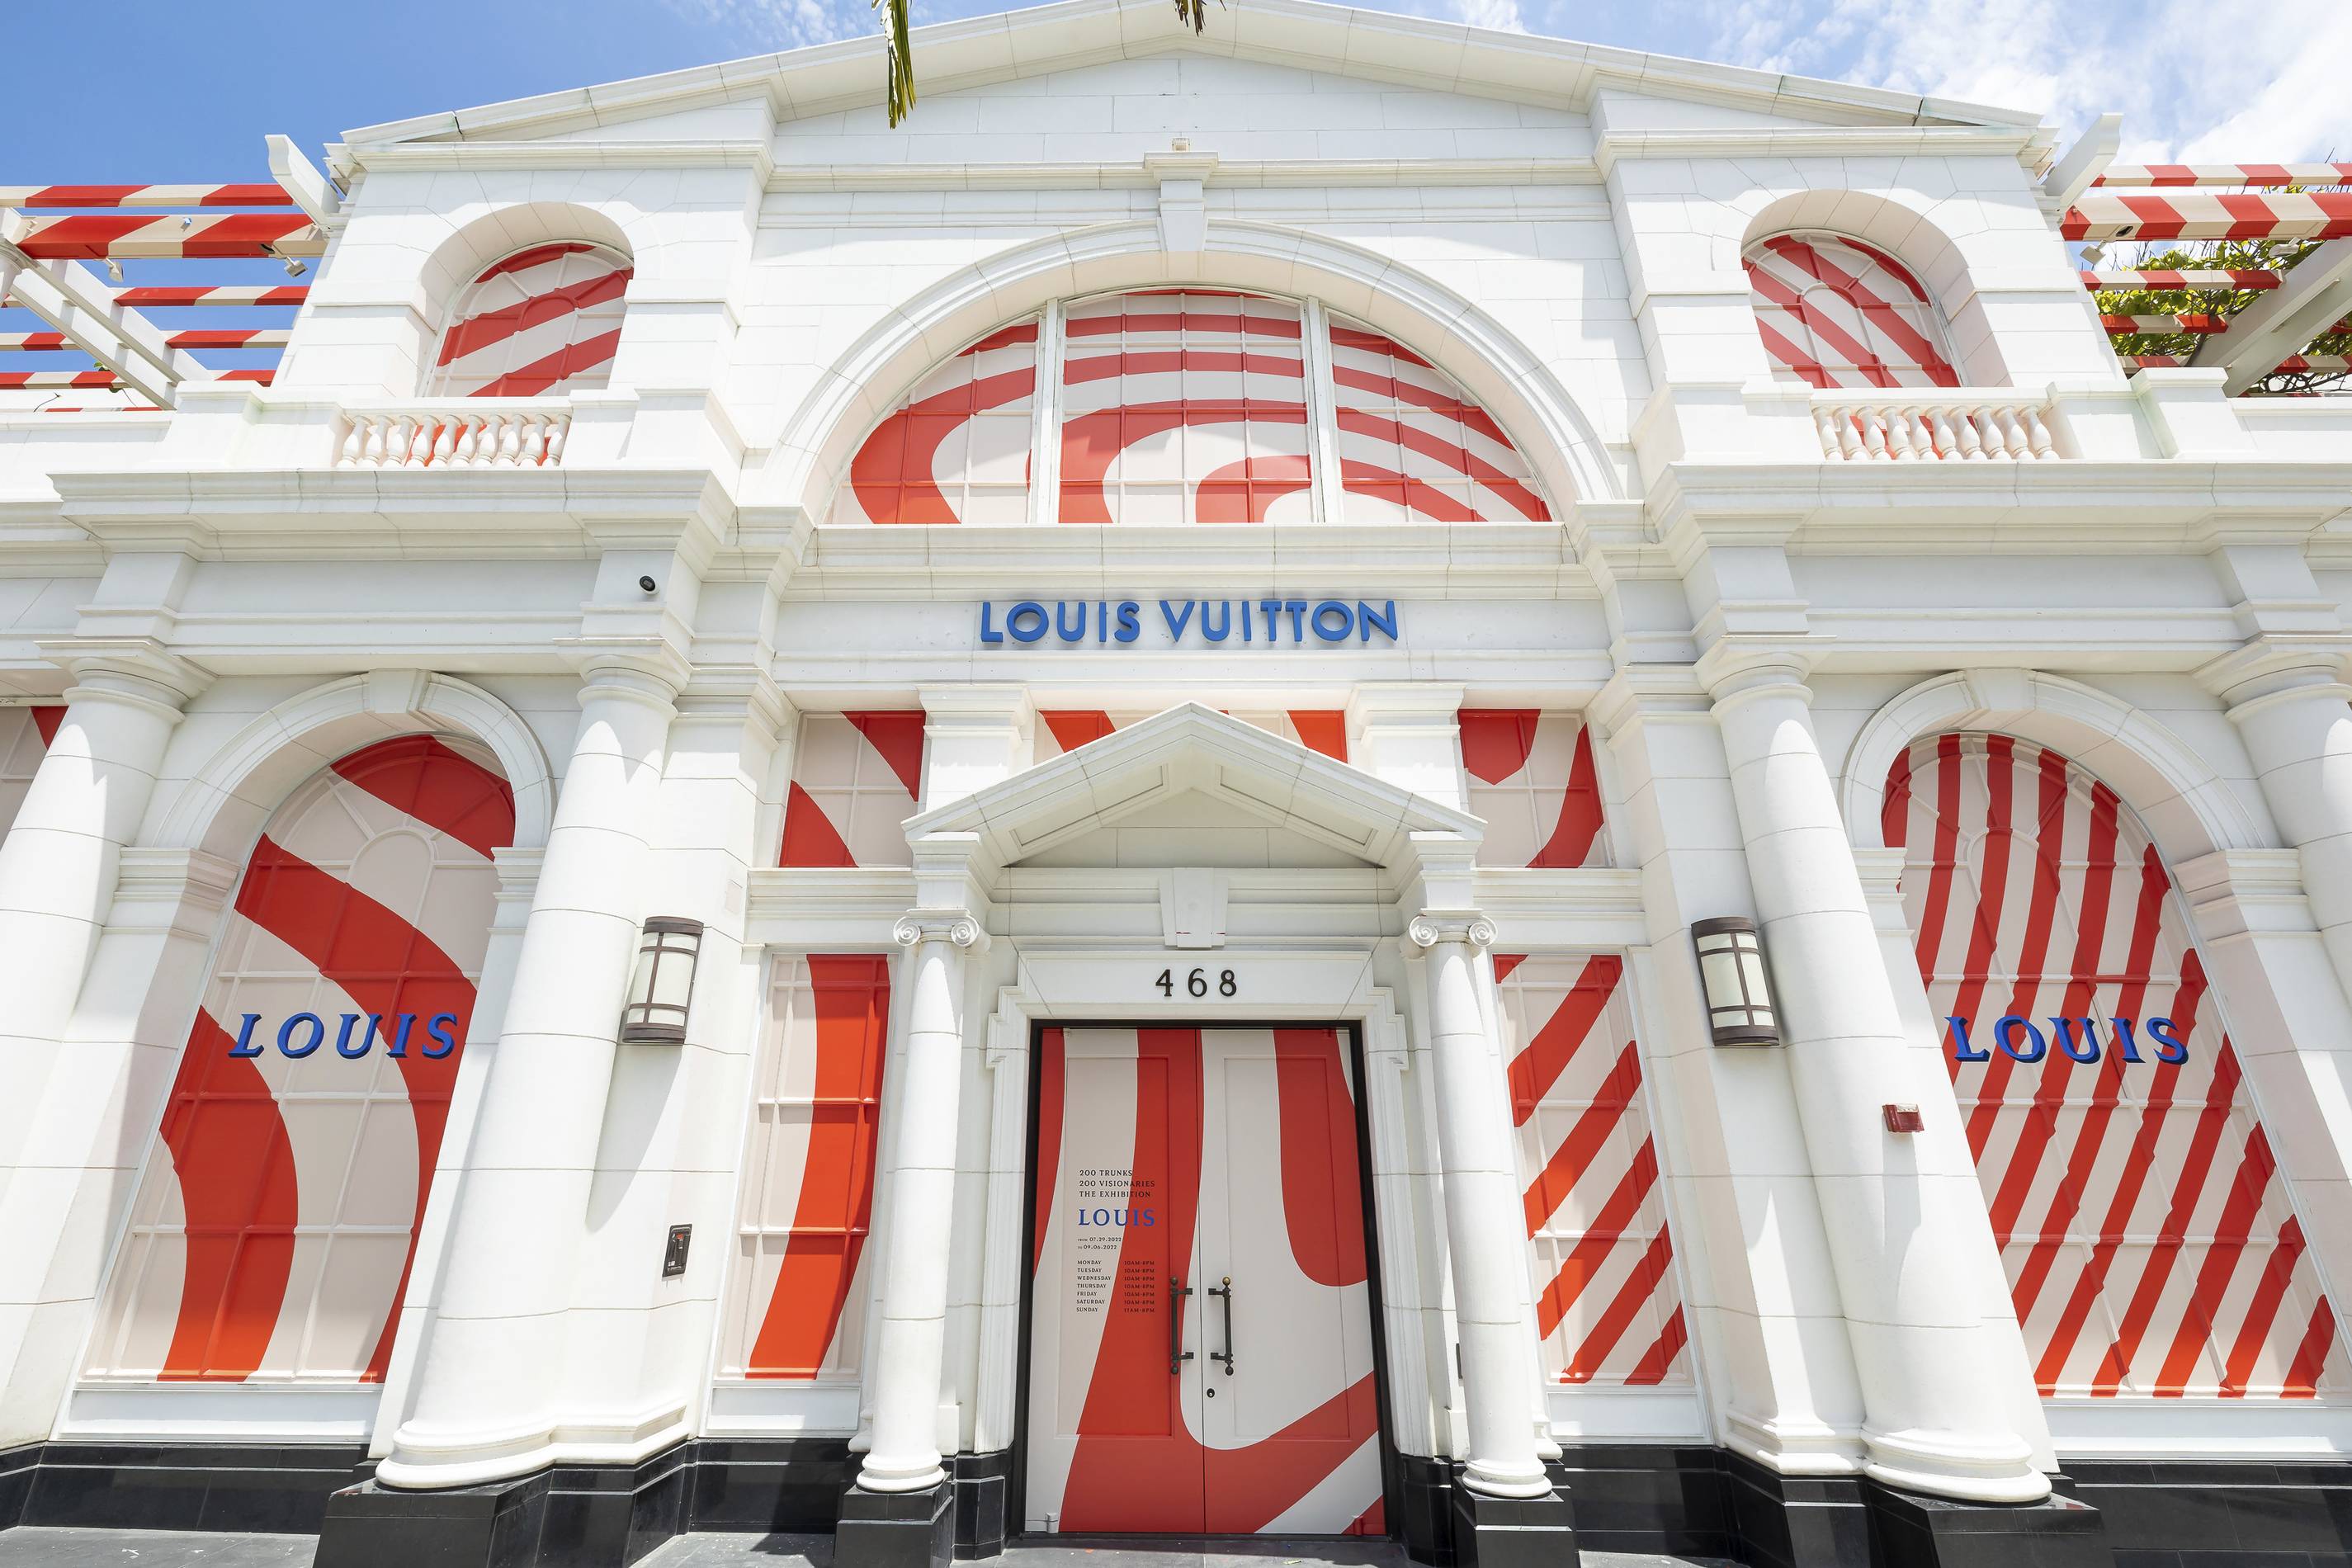 Louis Vuitton 200 Trunks 200 Visionaries: The Exhibition